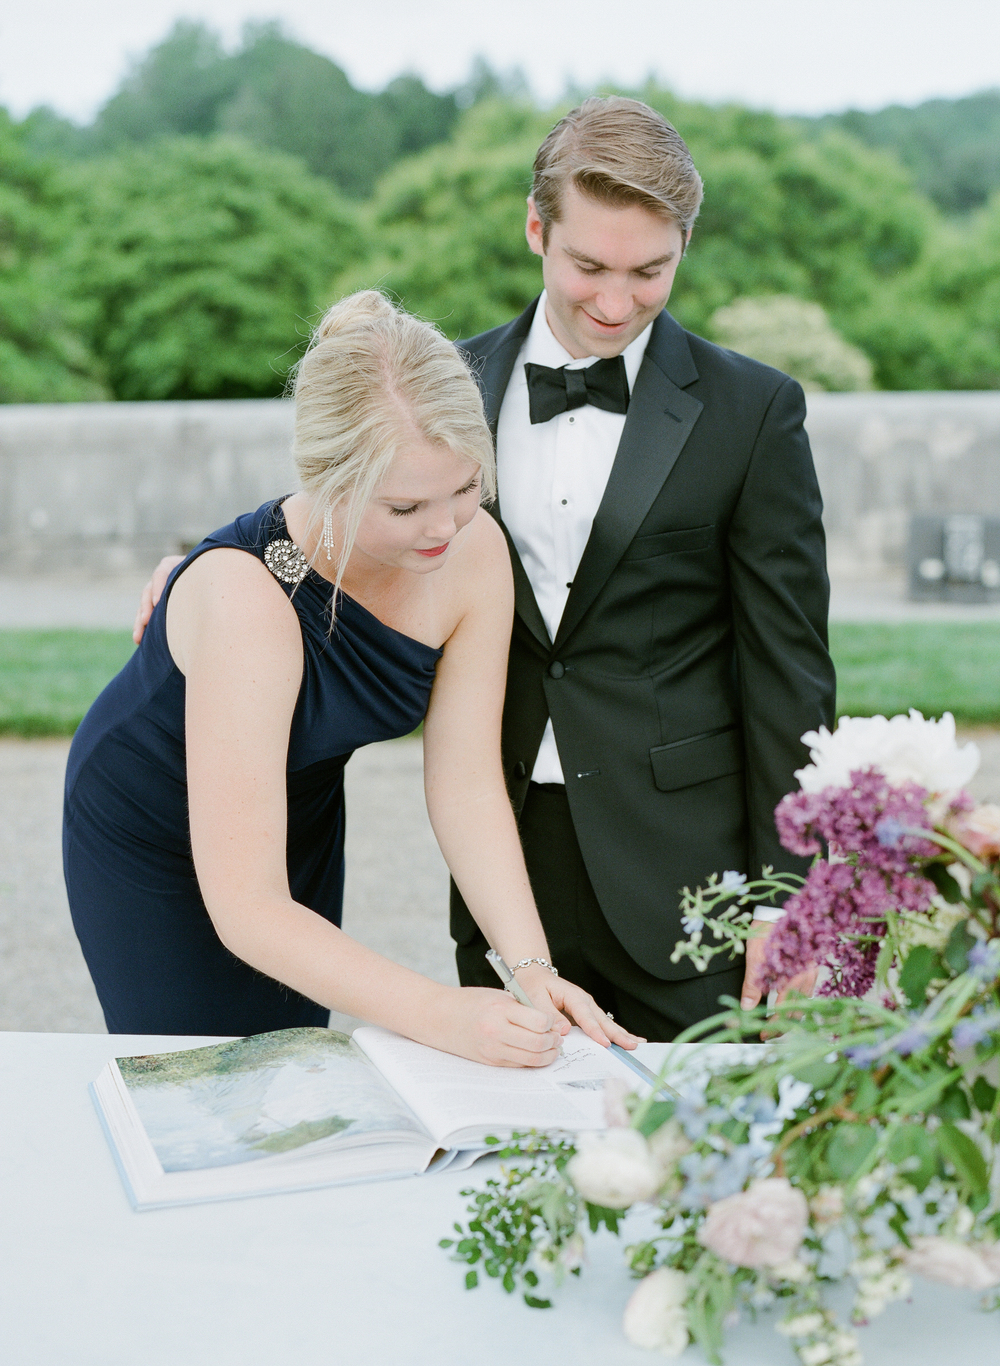 wedding guests sign guest book at Biltmore Estate wedding